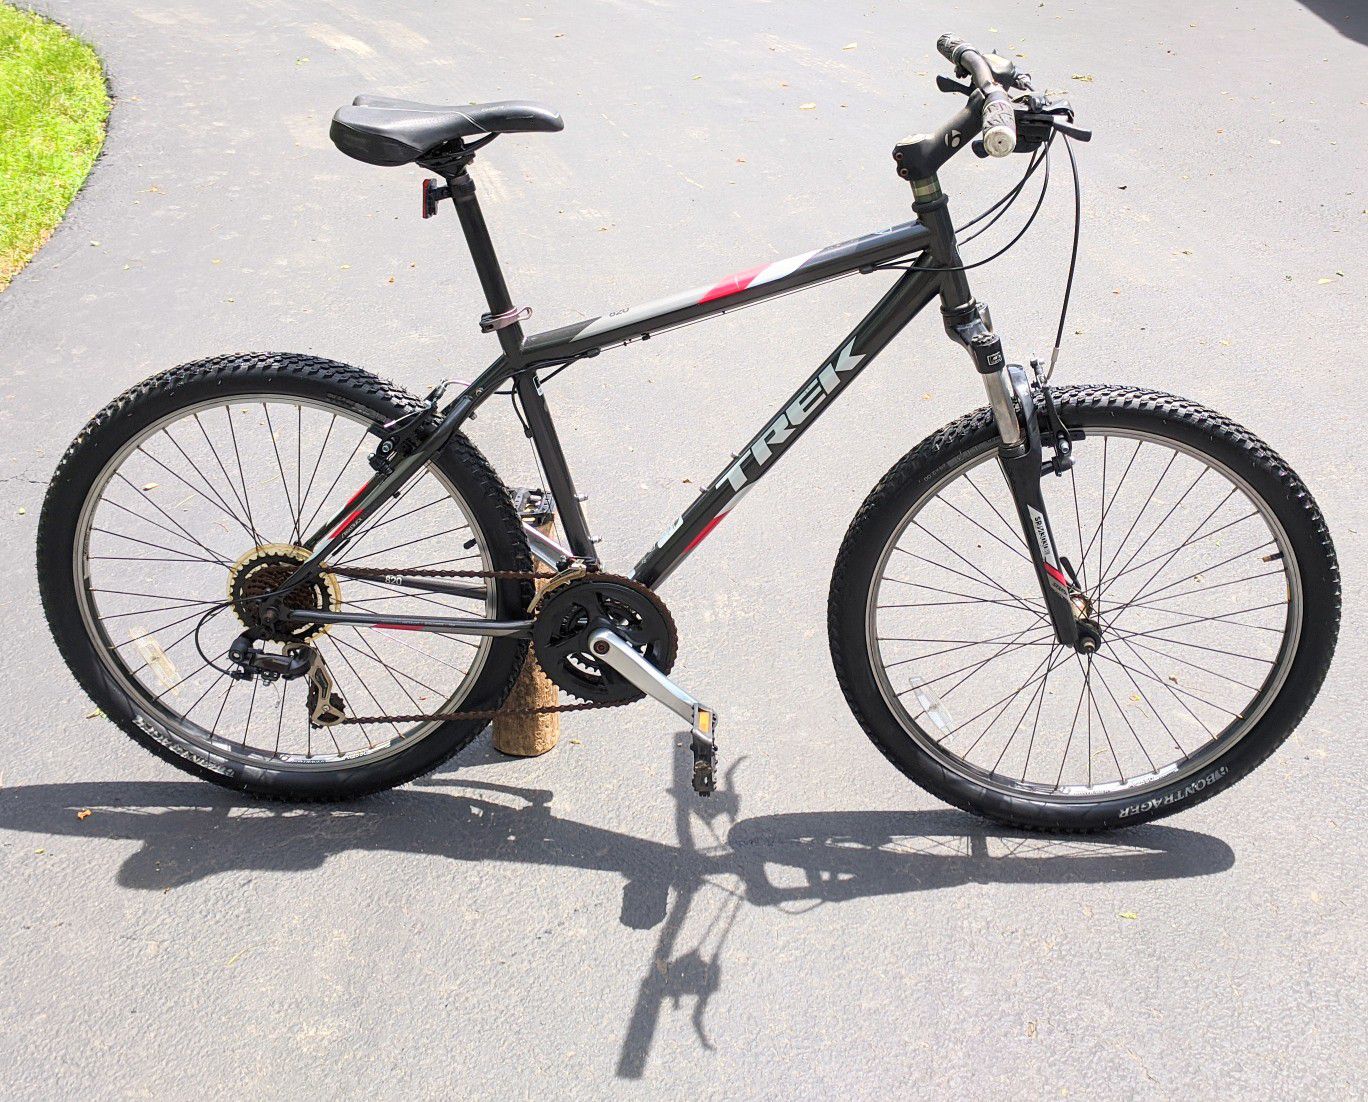 Trek 820 - medium size hardtail mountain bike